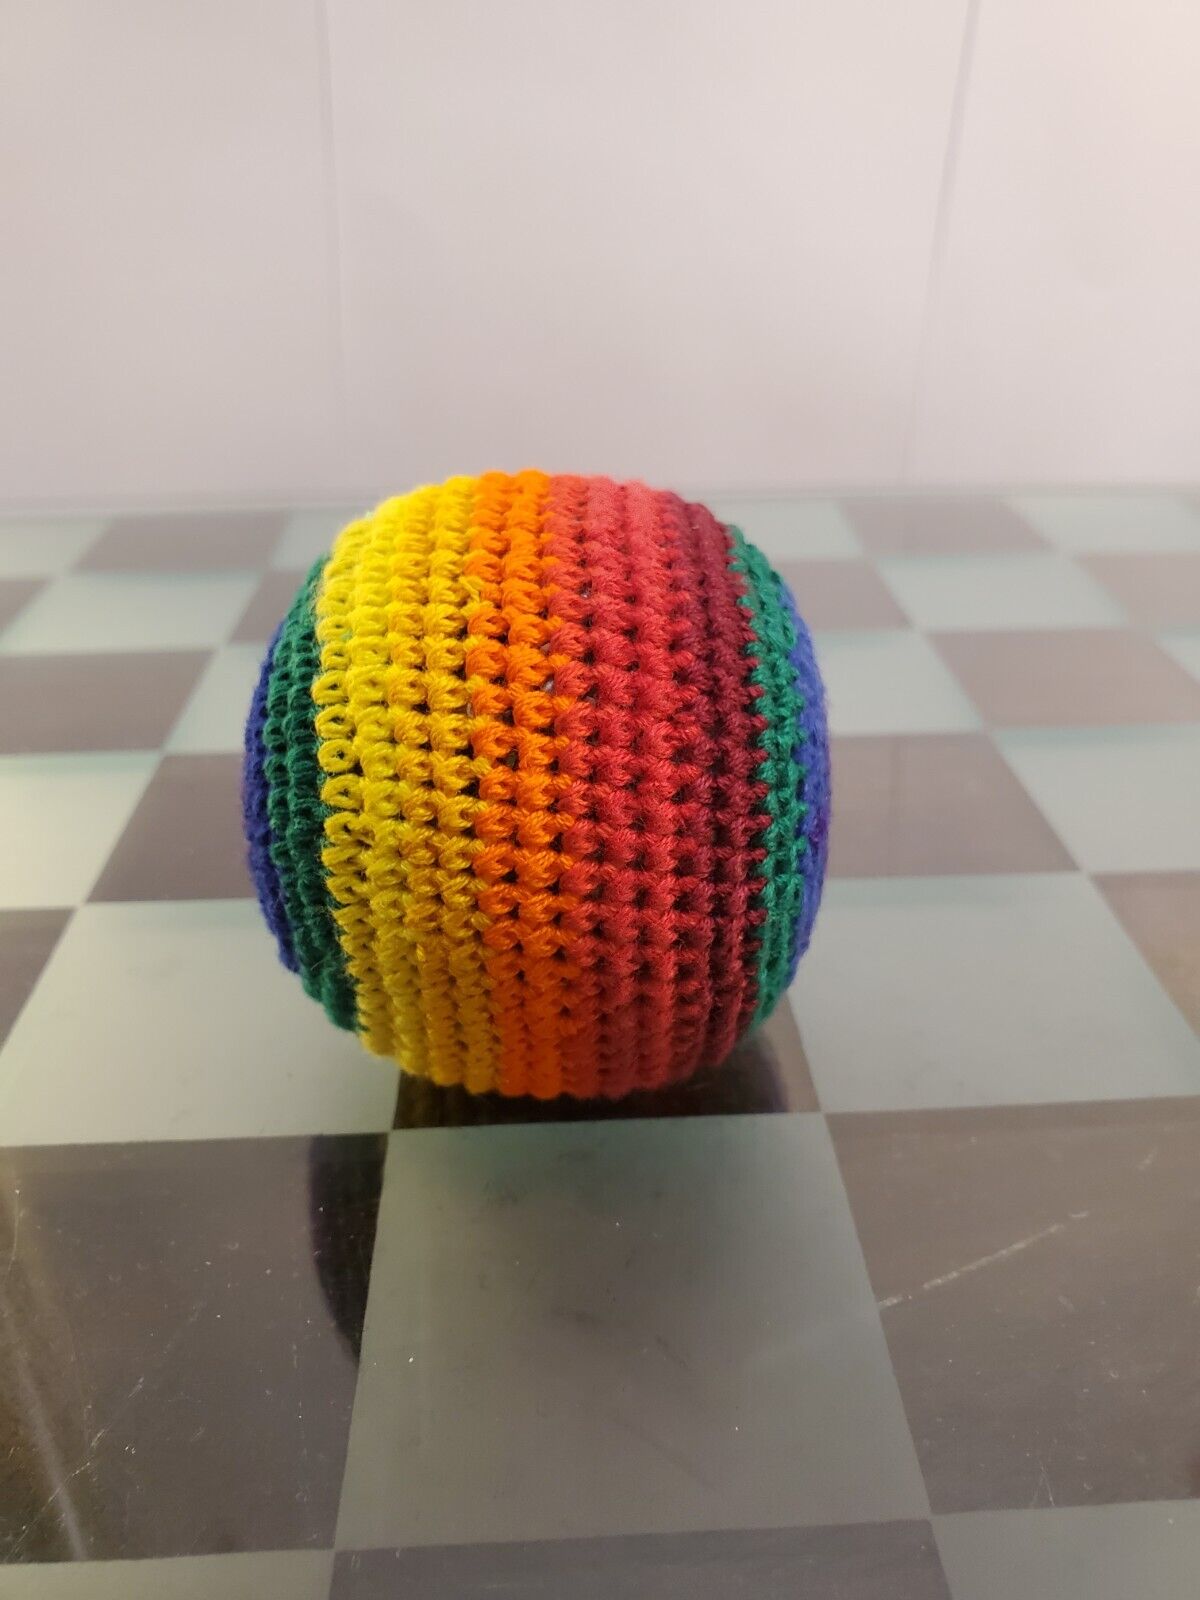 Rainbow Stripe Hacky Sack Footbag Woven Pellet Juggling Stress Ball Guatemalan